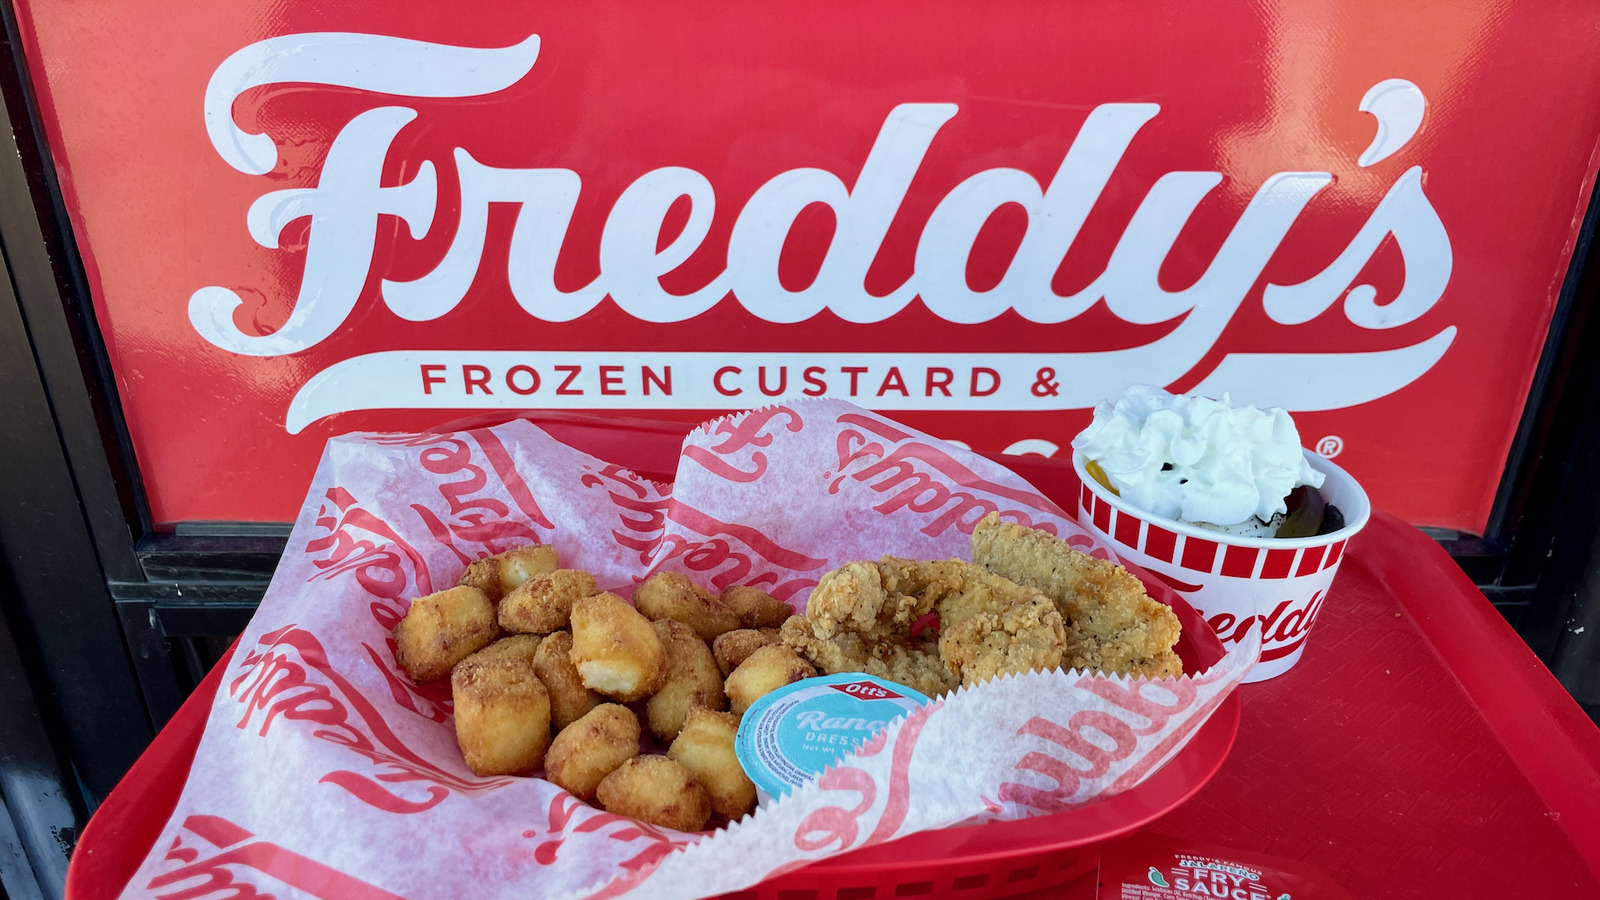 Frozen custard and Freddy's Frozen Custard & Steakburgers